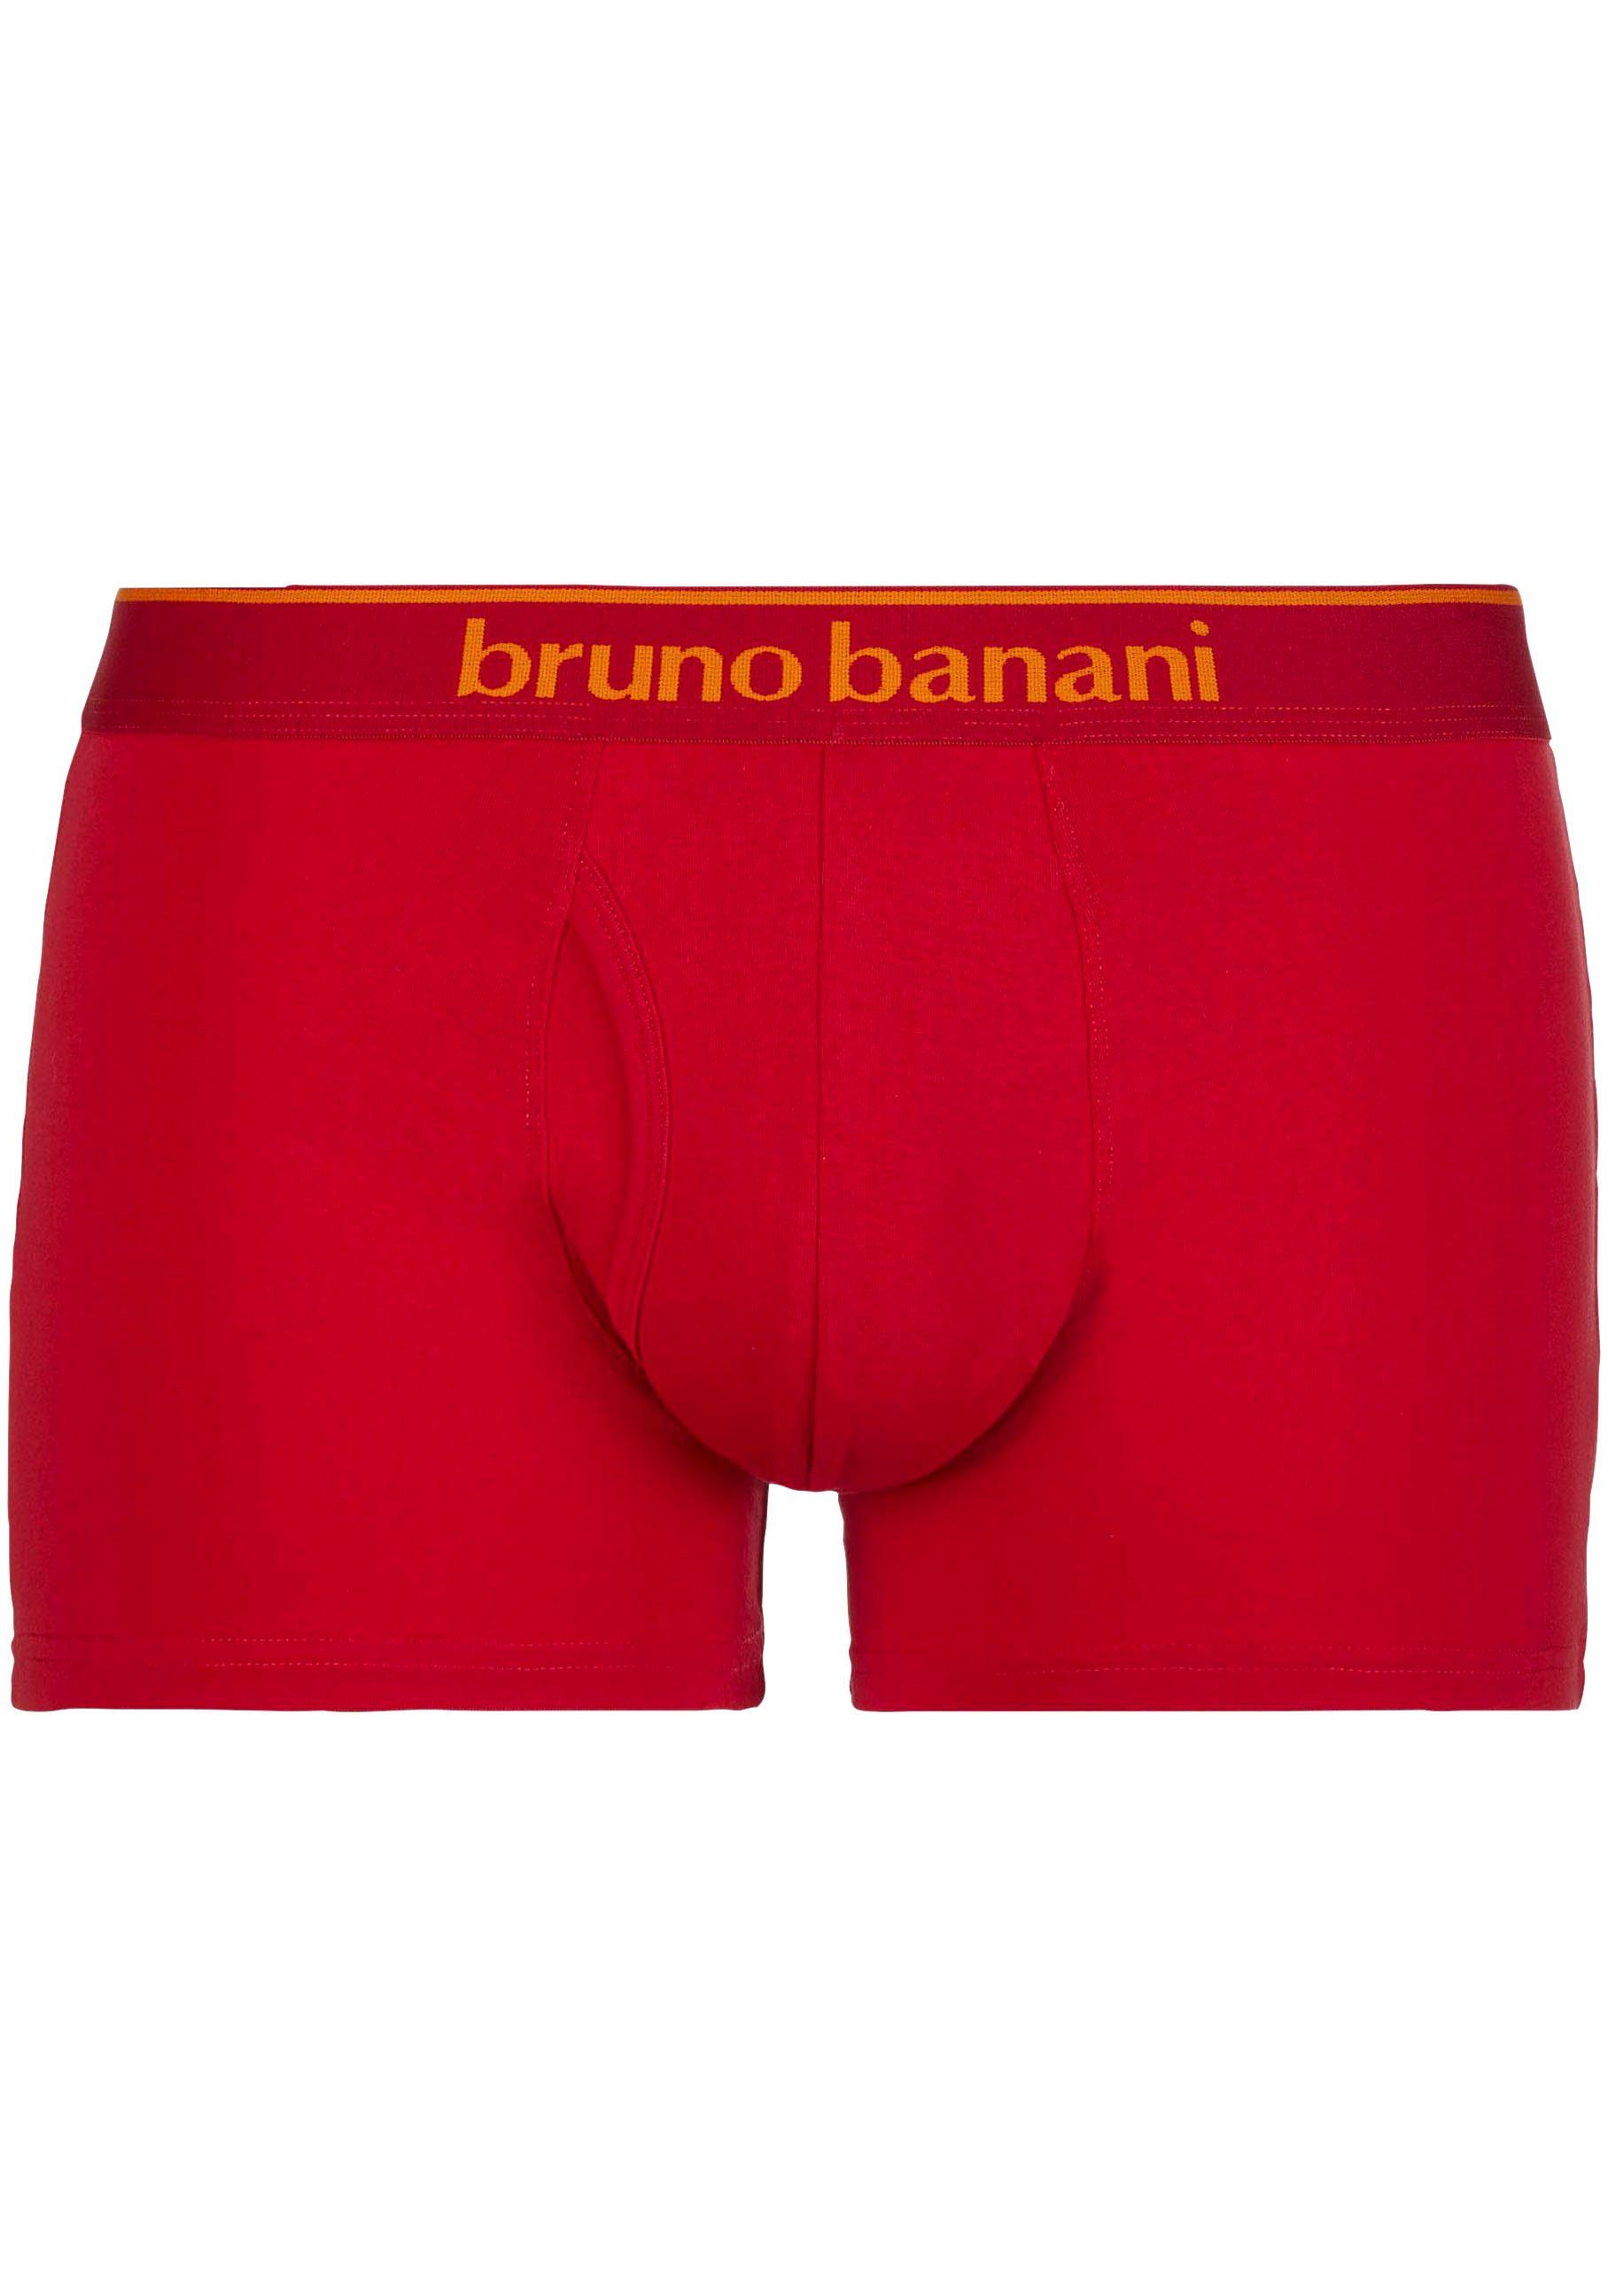 Quick Details Short Banani Kontrastfarbene Bruno Access (Packung, 2Pack Boxershorts rot-schwarz 2-St)